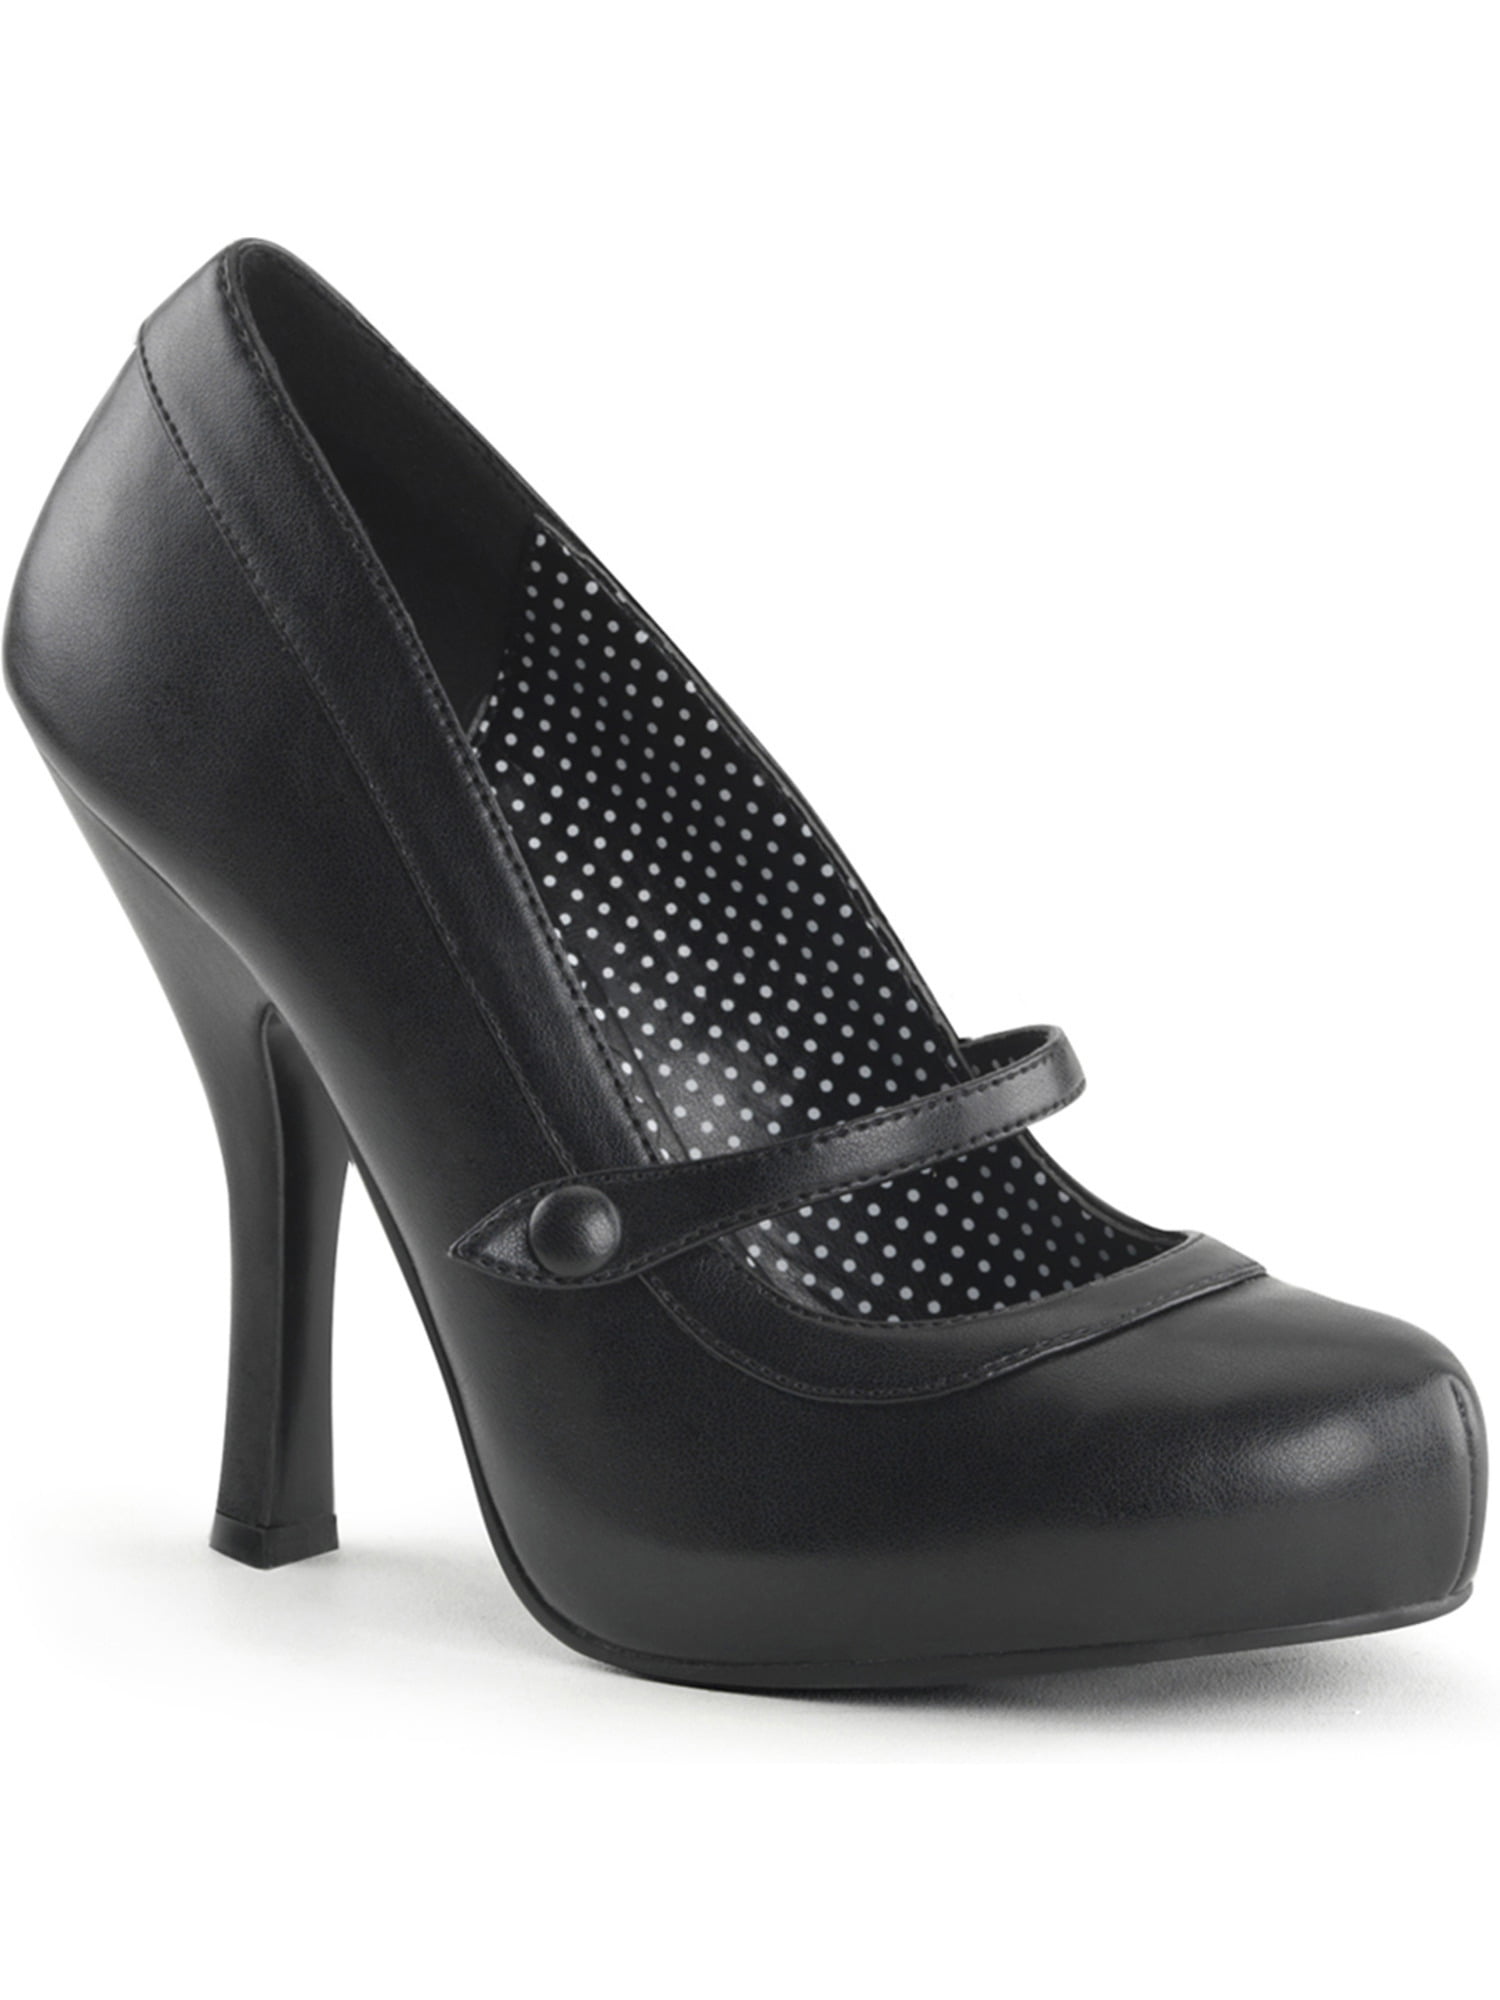 women's platform formal shoes